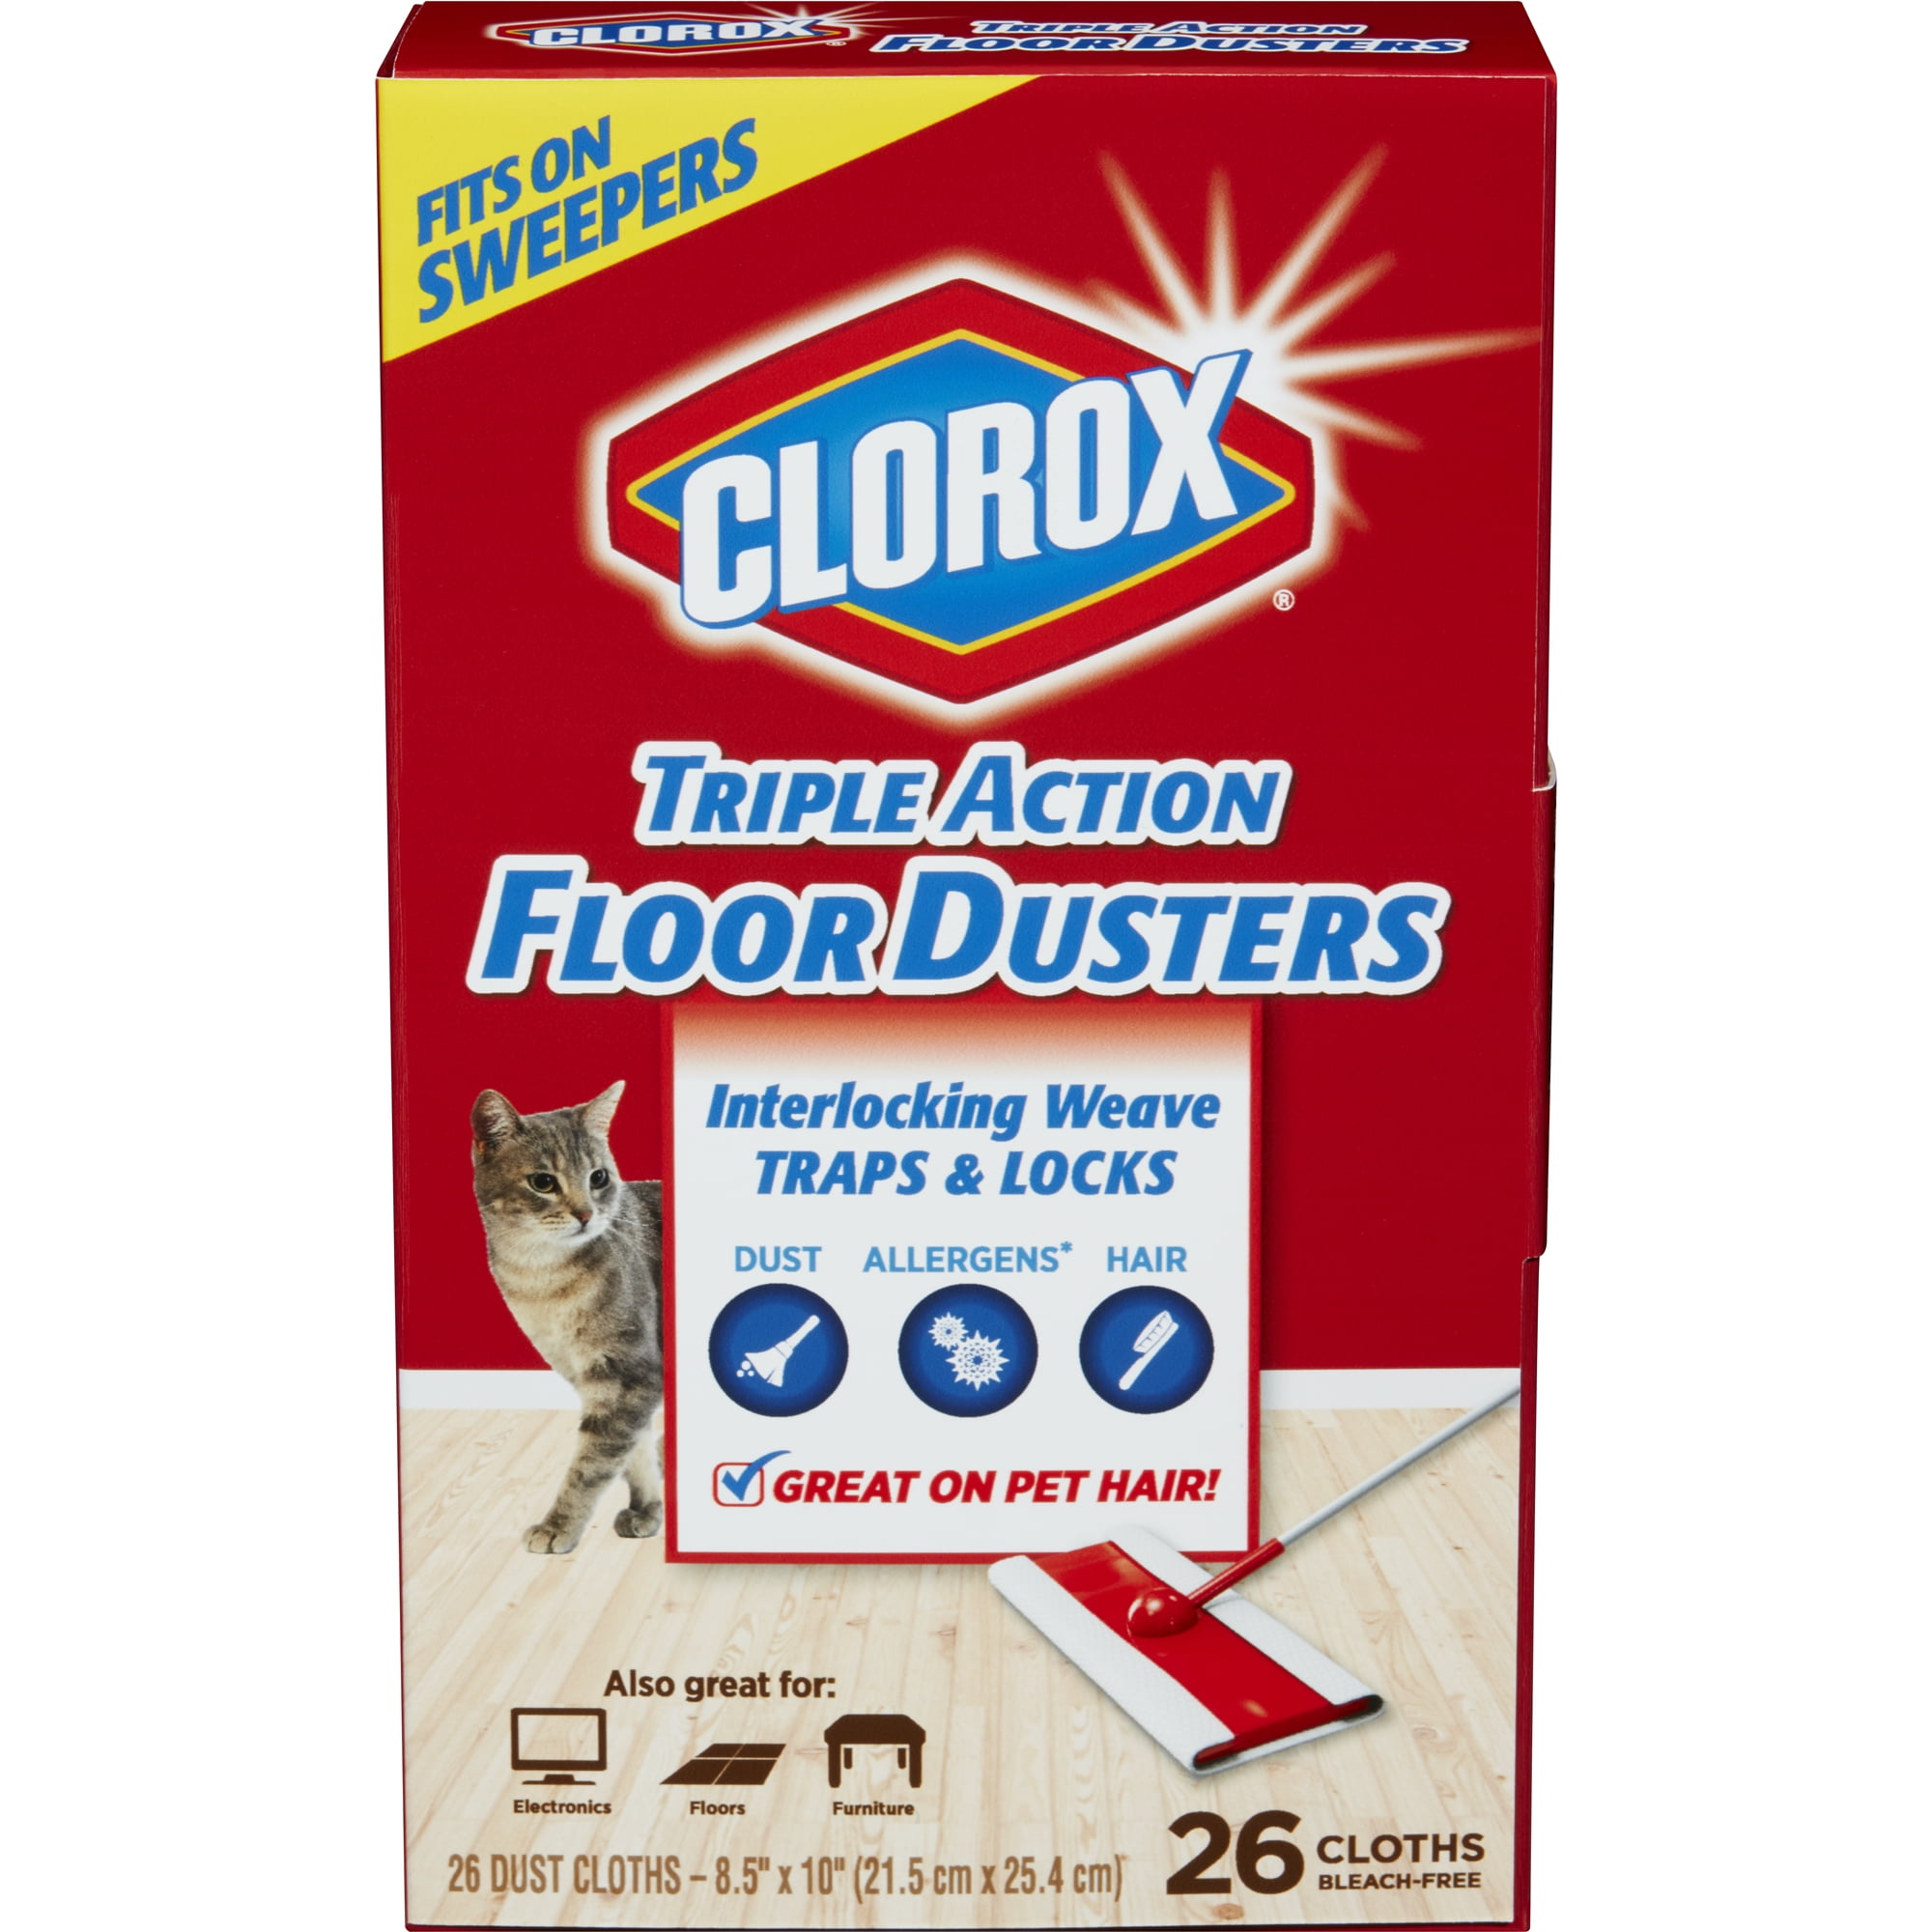 Clorox Triple Action Dust Wipes - CLO31312EA 